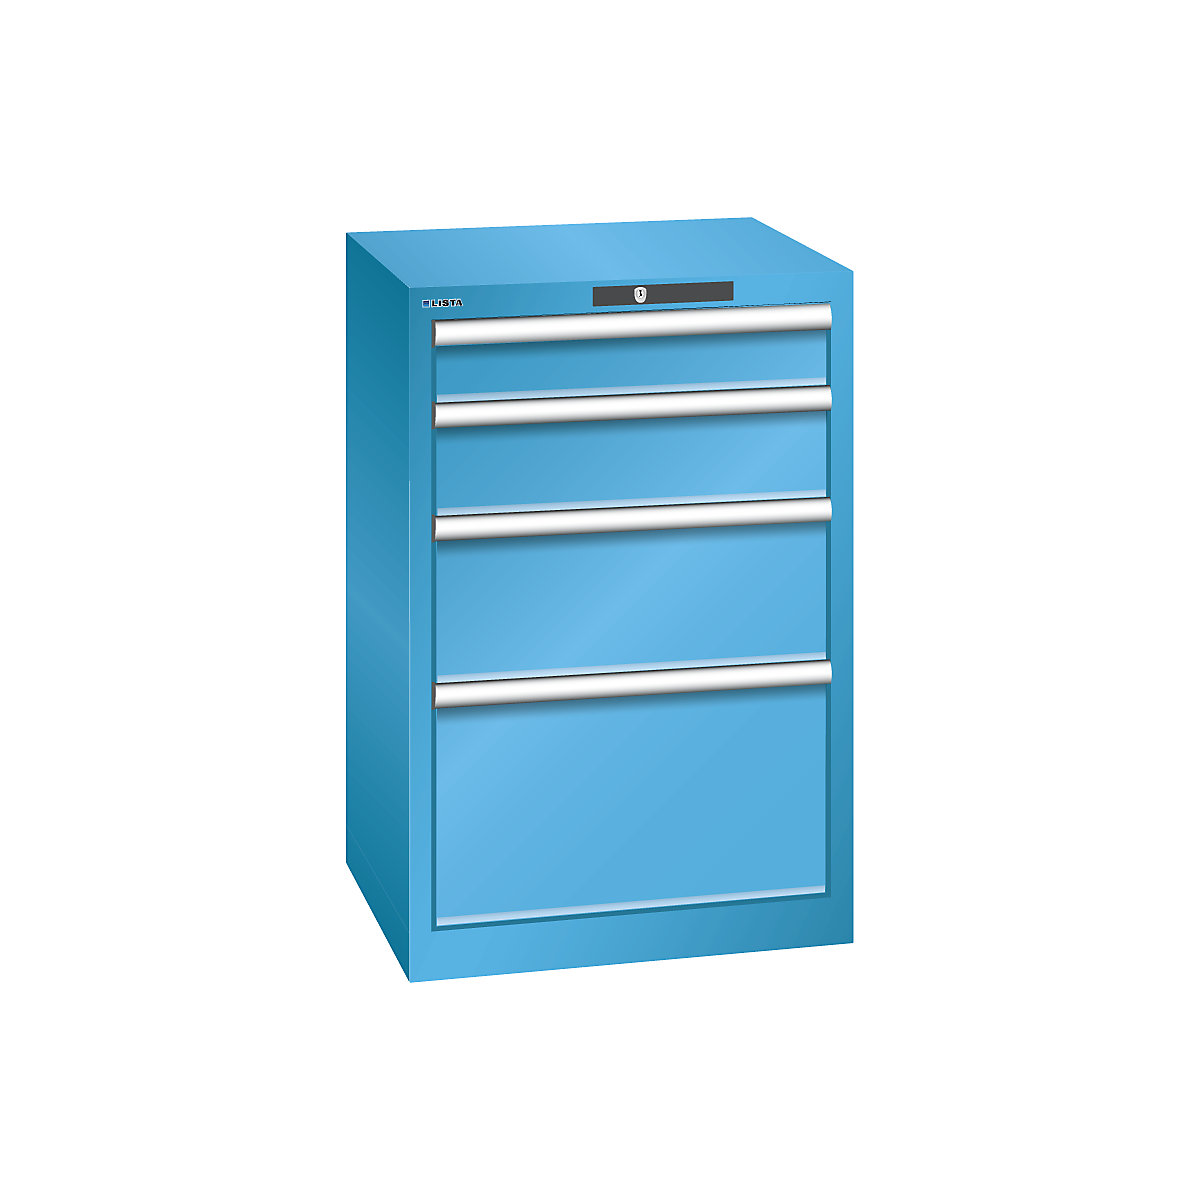 Drawer cupboard, 4 drawers – LISTA, WxDxH 564 x 572 x 850 mm, light blue-10